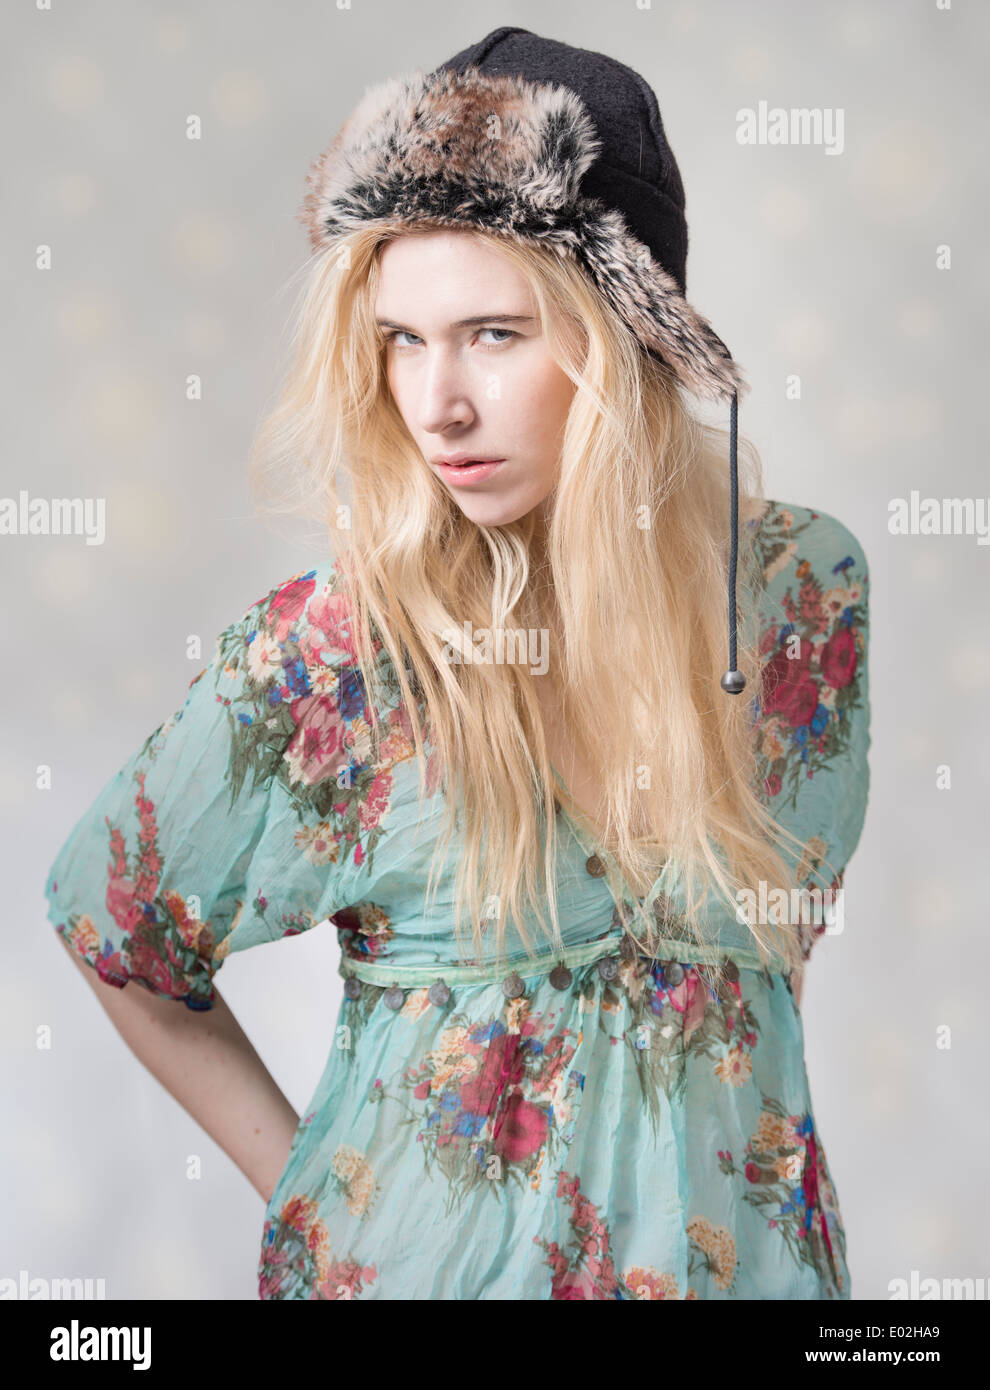 Mujer rubia en ropa de verano e invierno hat Foto de stock